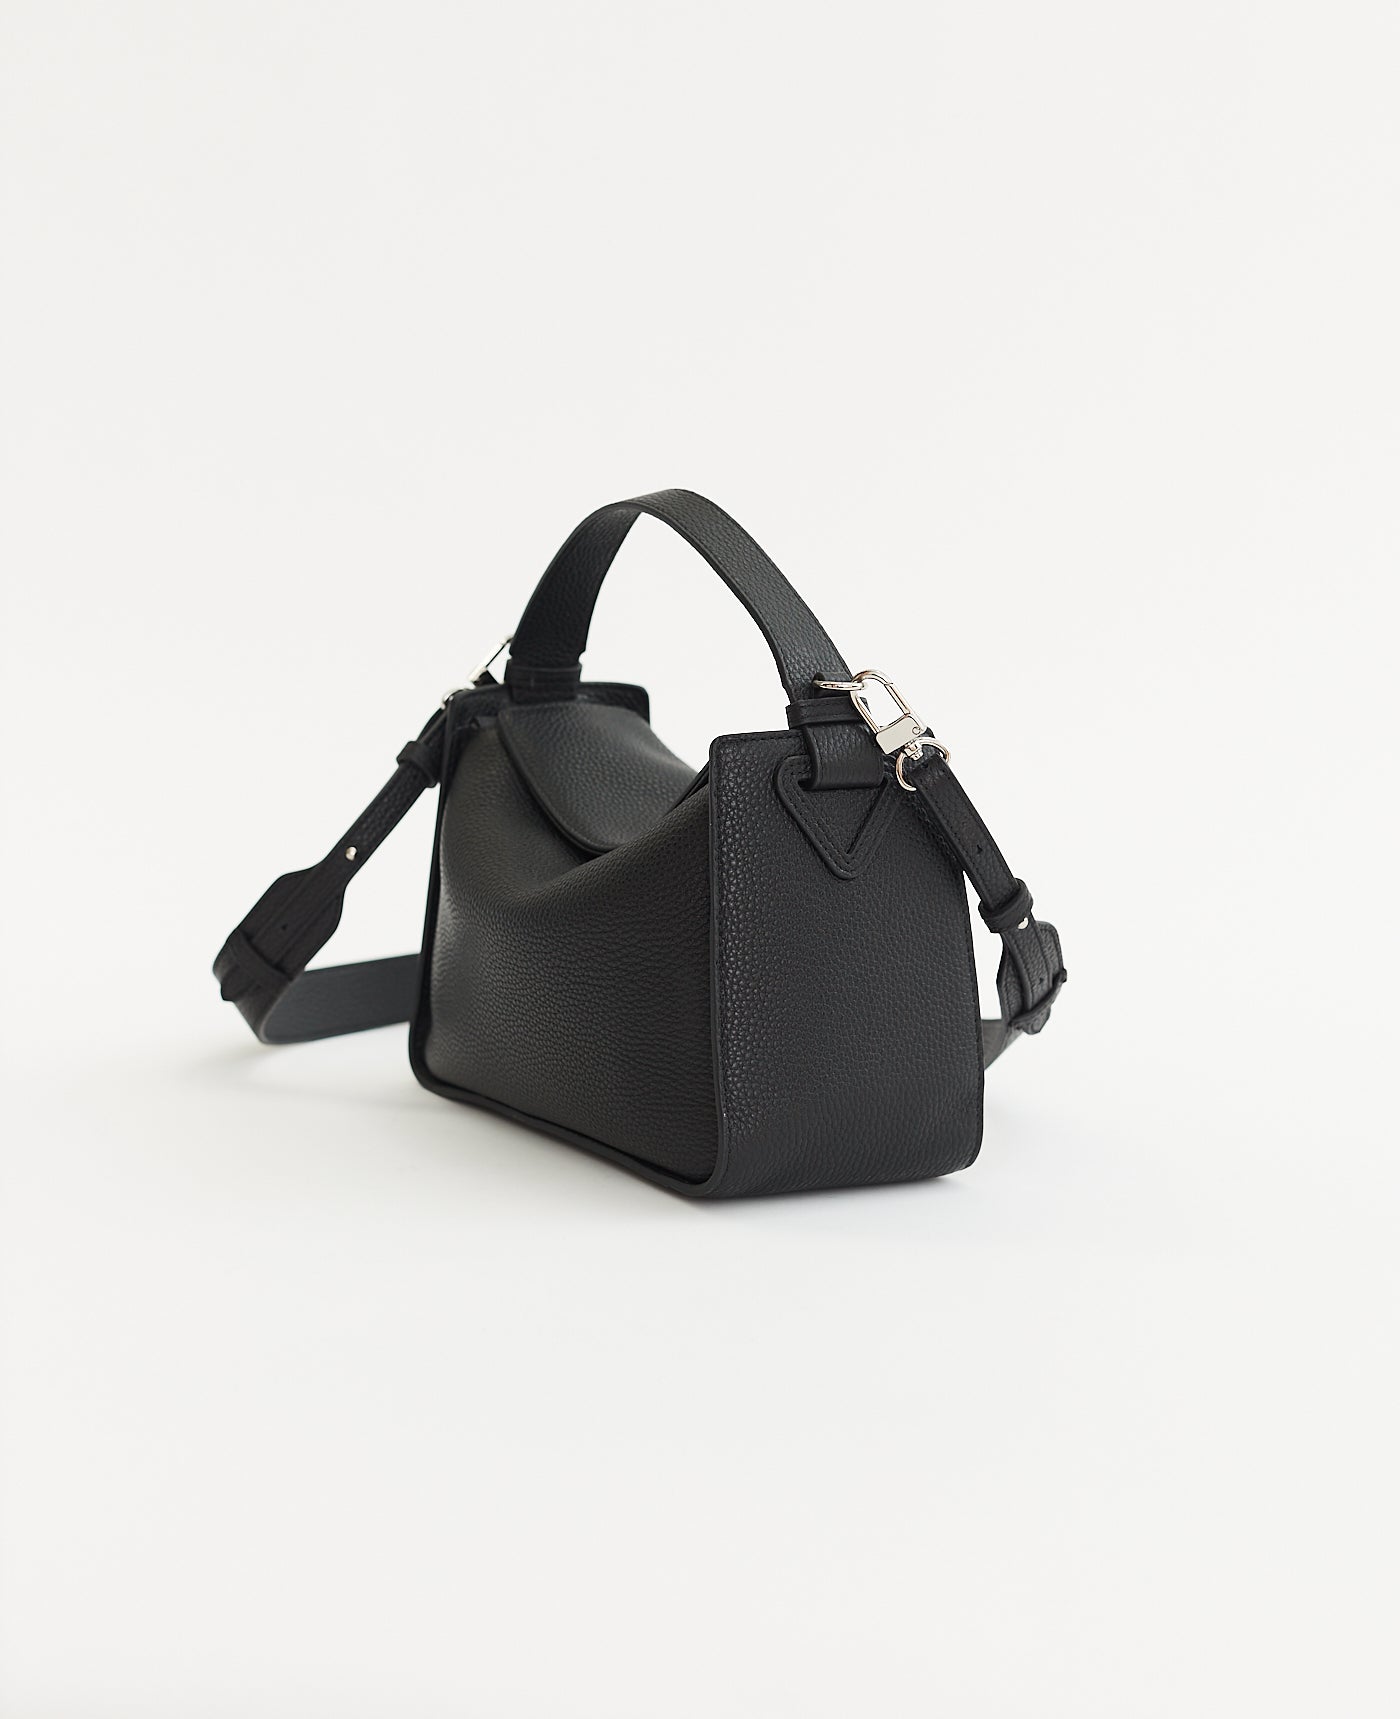 Clementine Bag: Black Pebbled Leather